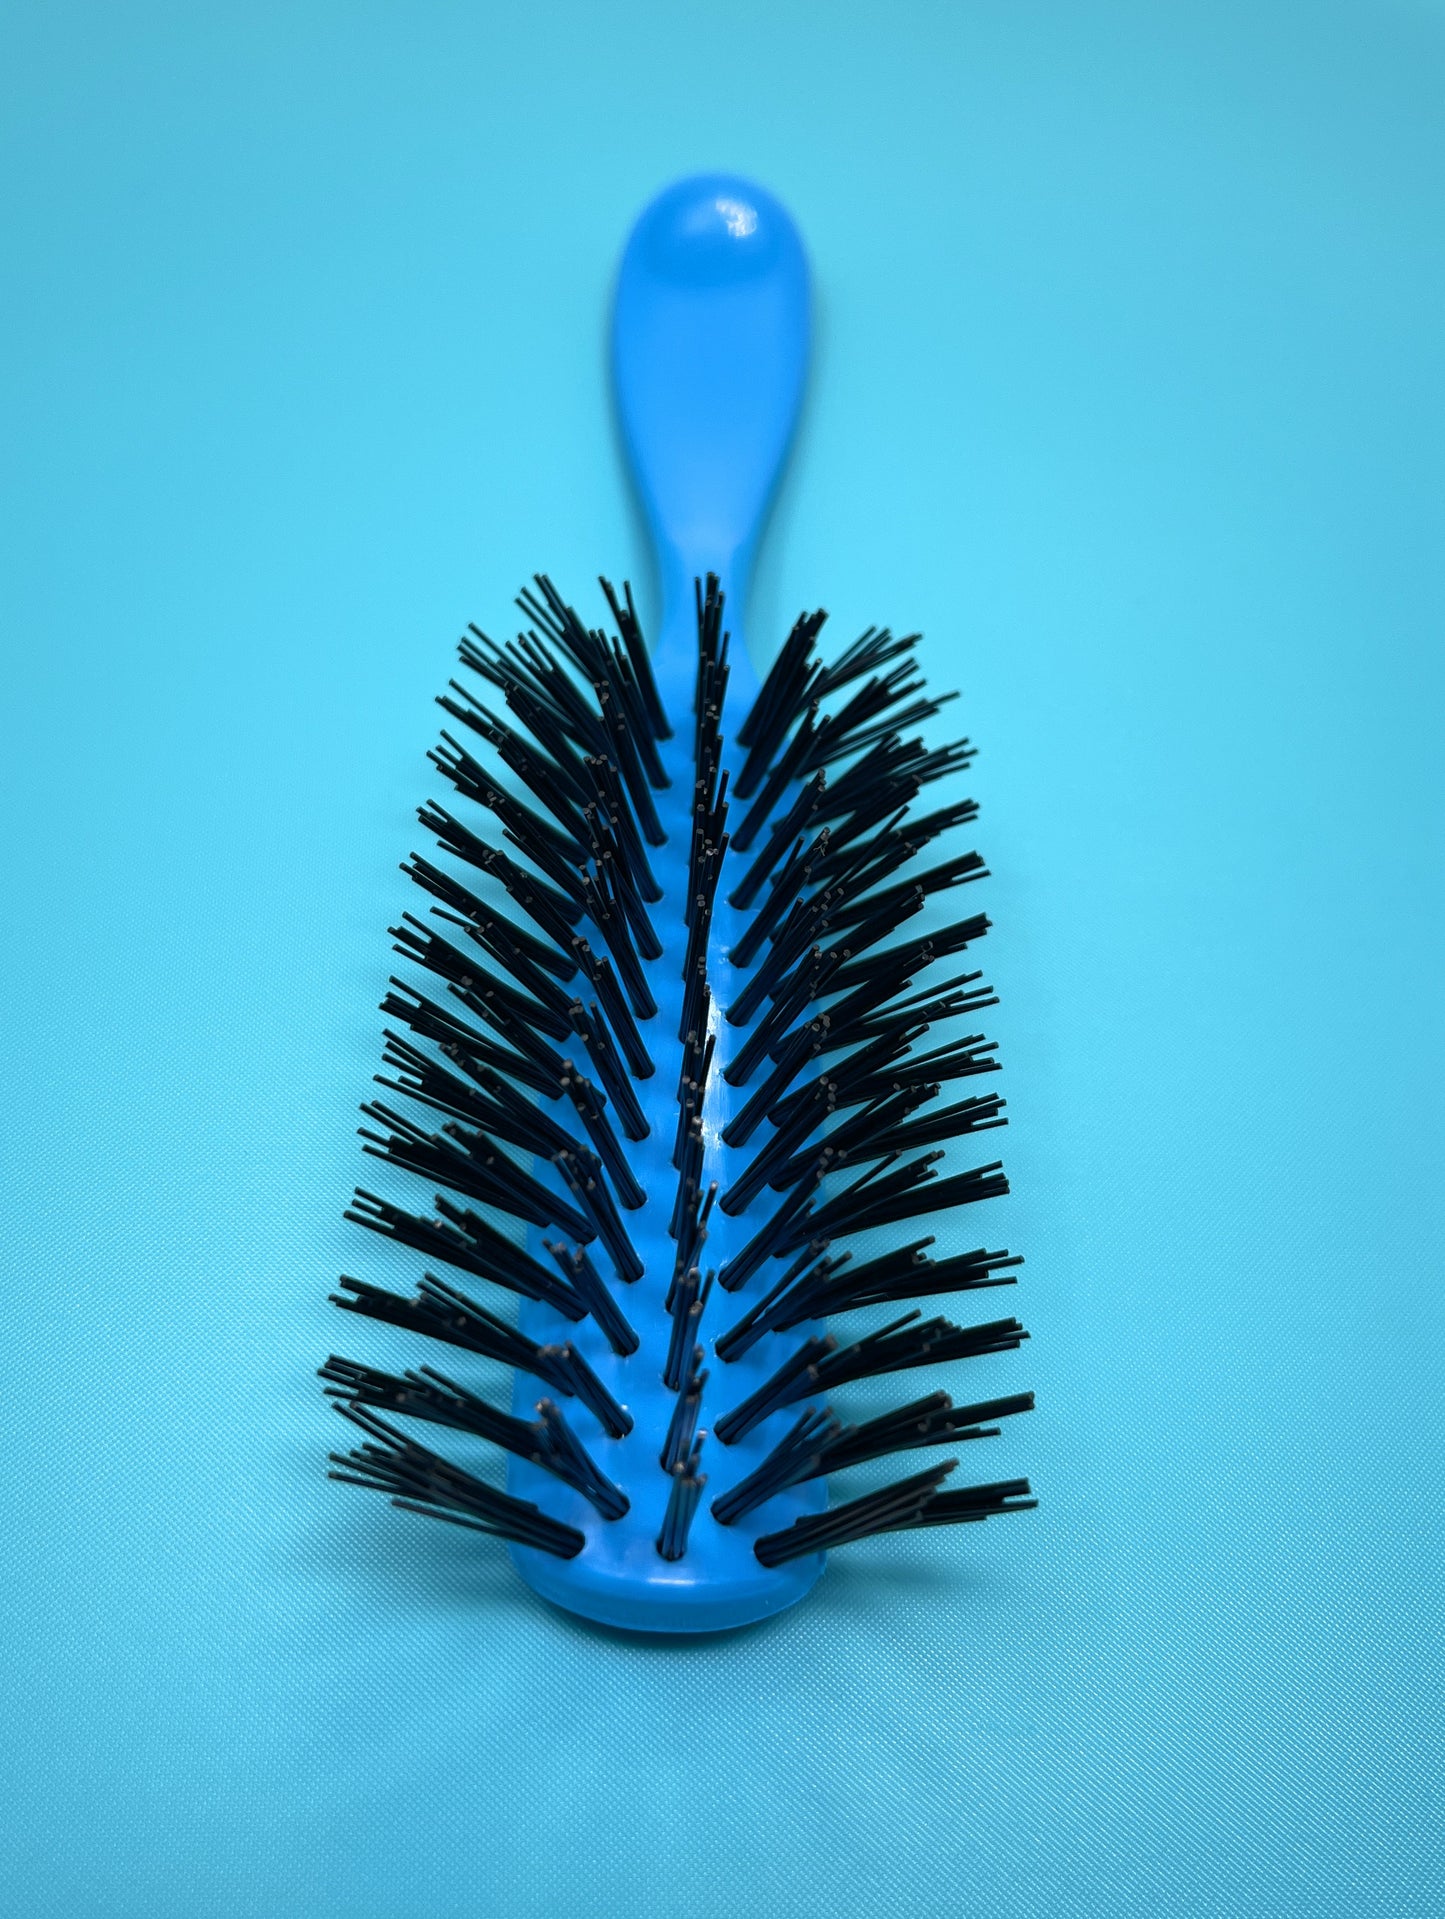 Allegro Combs 100 Nylon Bristles Hair Brush 7-Row Styling Brush Teasing Detangling Salon Blue 2 Pcs.